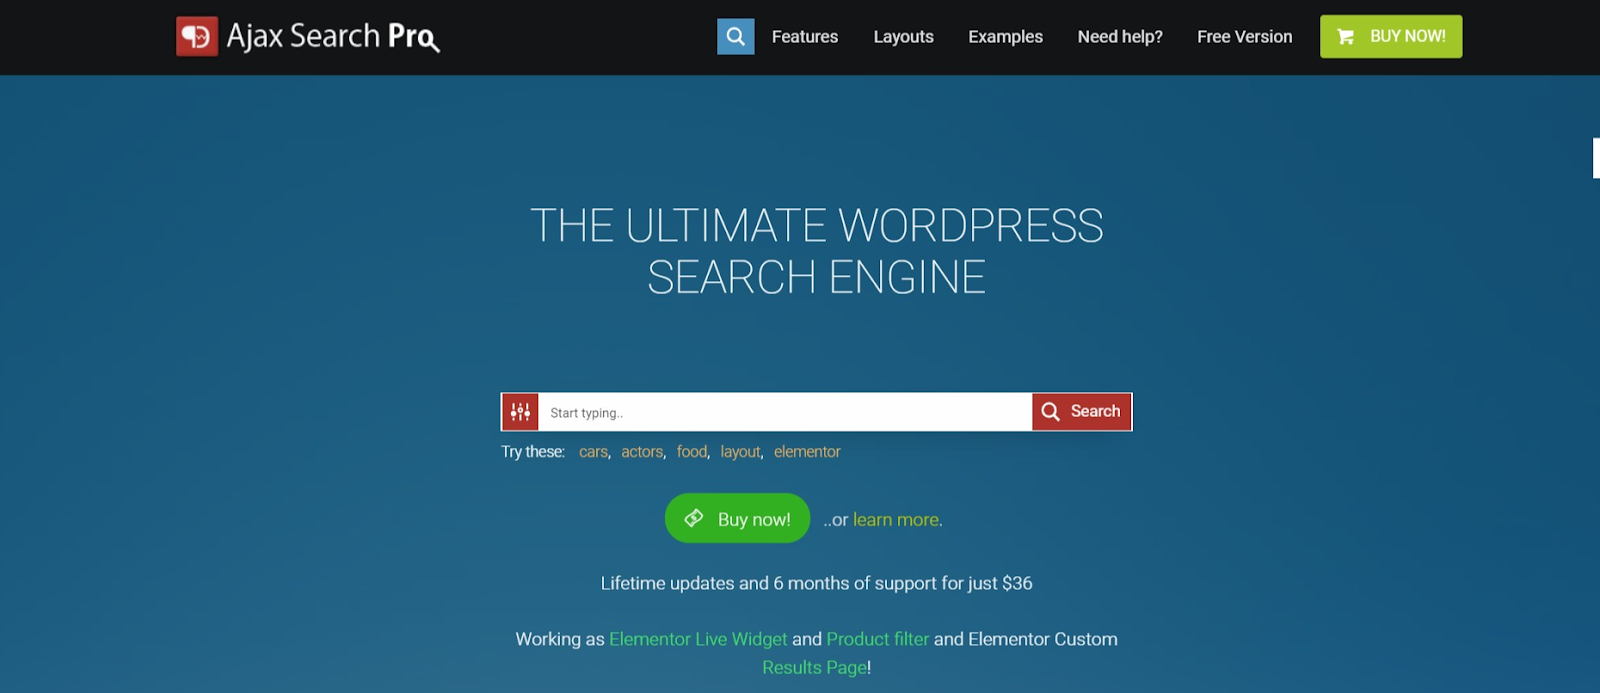 WordPress Search Plugins